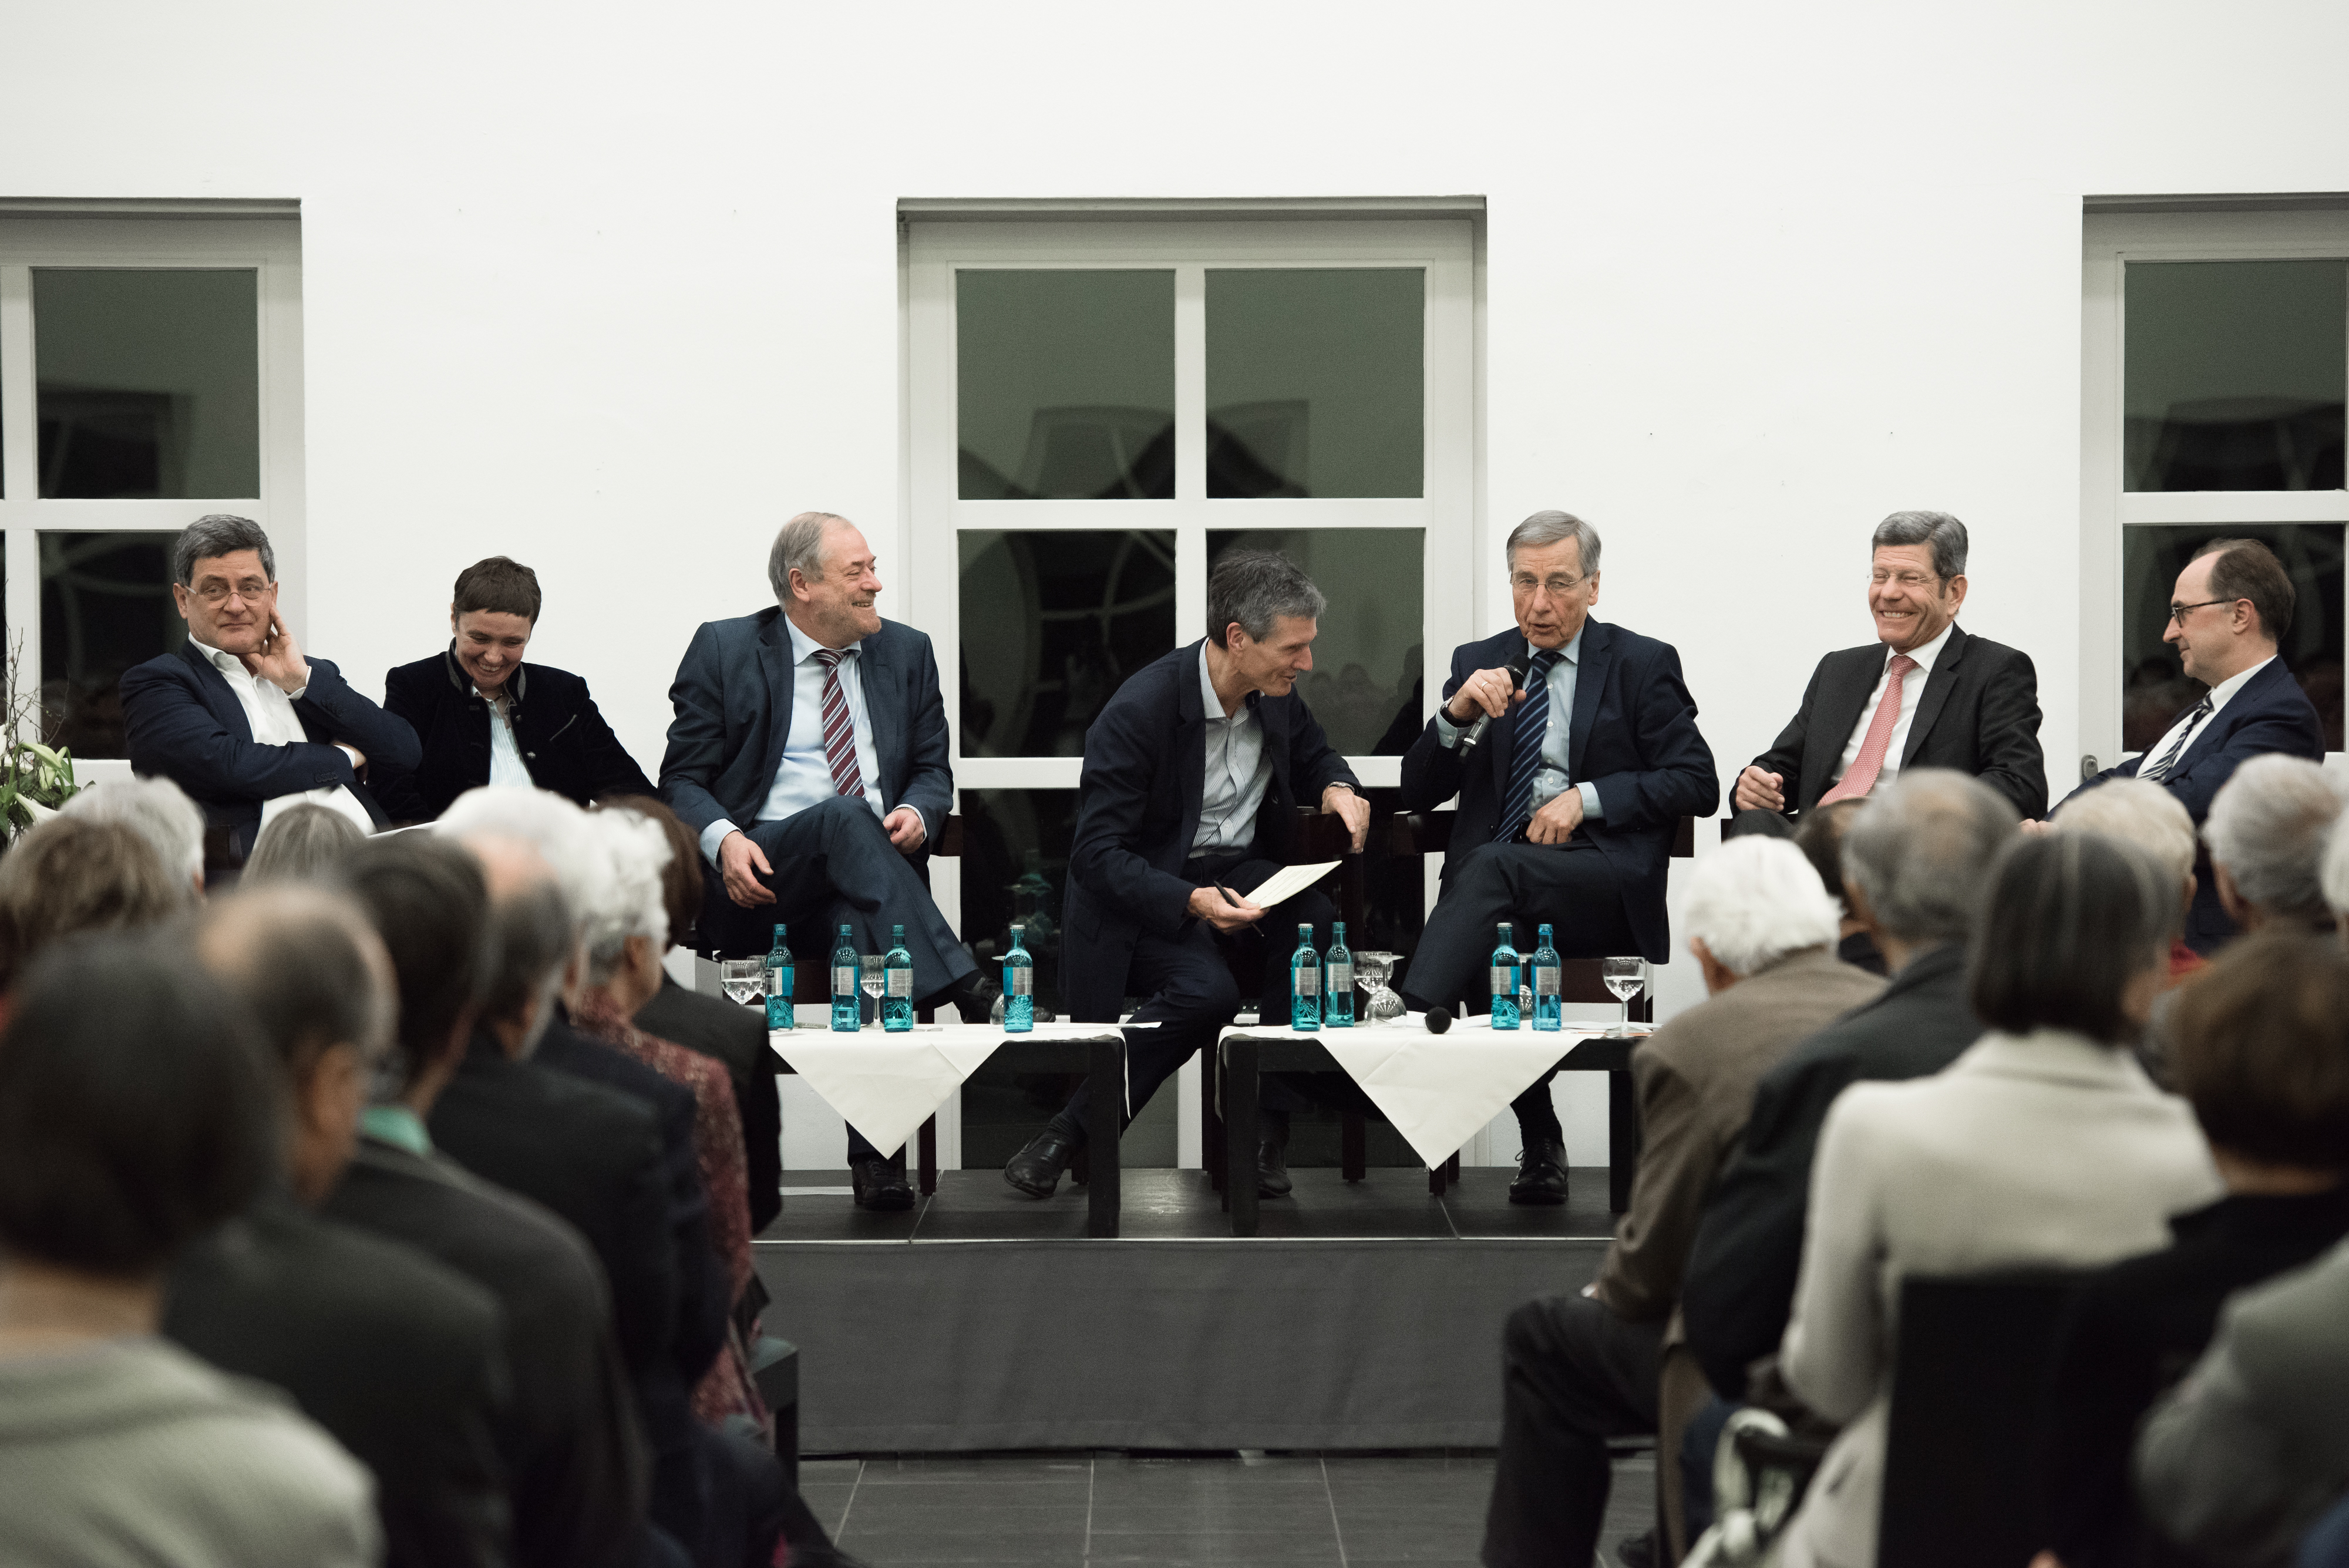 Discussion forum (left to right) with Tichy, Welter, Zimmermann, Dudenhöffer, Clement, Mattes, Lehr